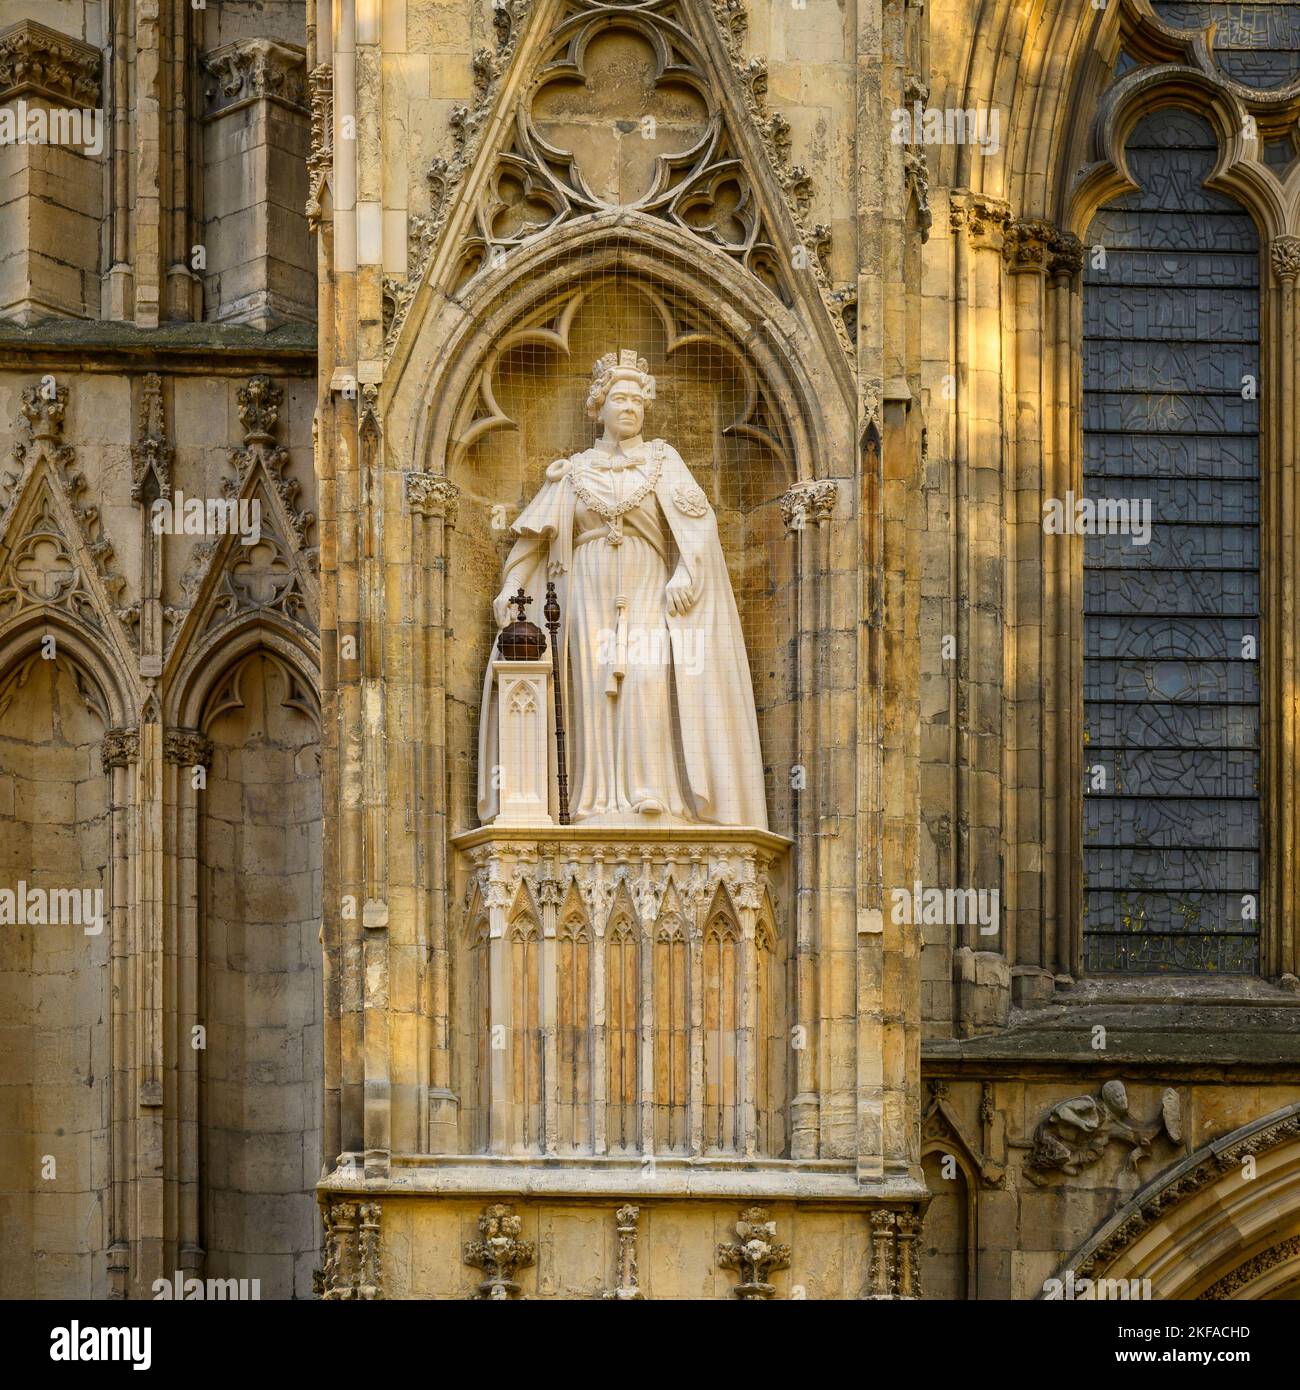 Elizabeth 2 limestone statue standing on high niche wearing ceremonial dress (orb & sceptre) - west front, York Minster, North Yorkshire, England, UK. Stock Photo